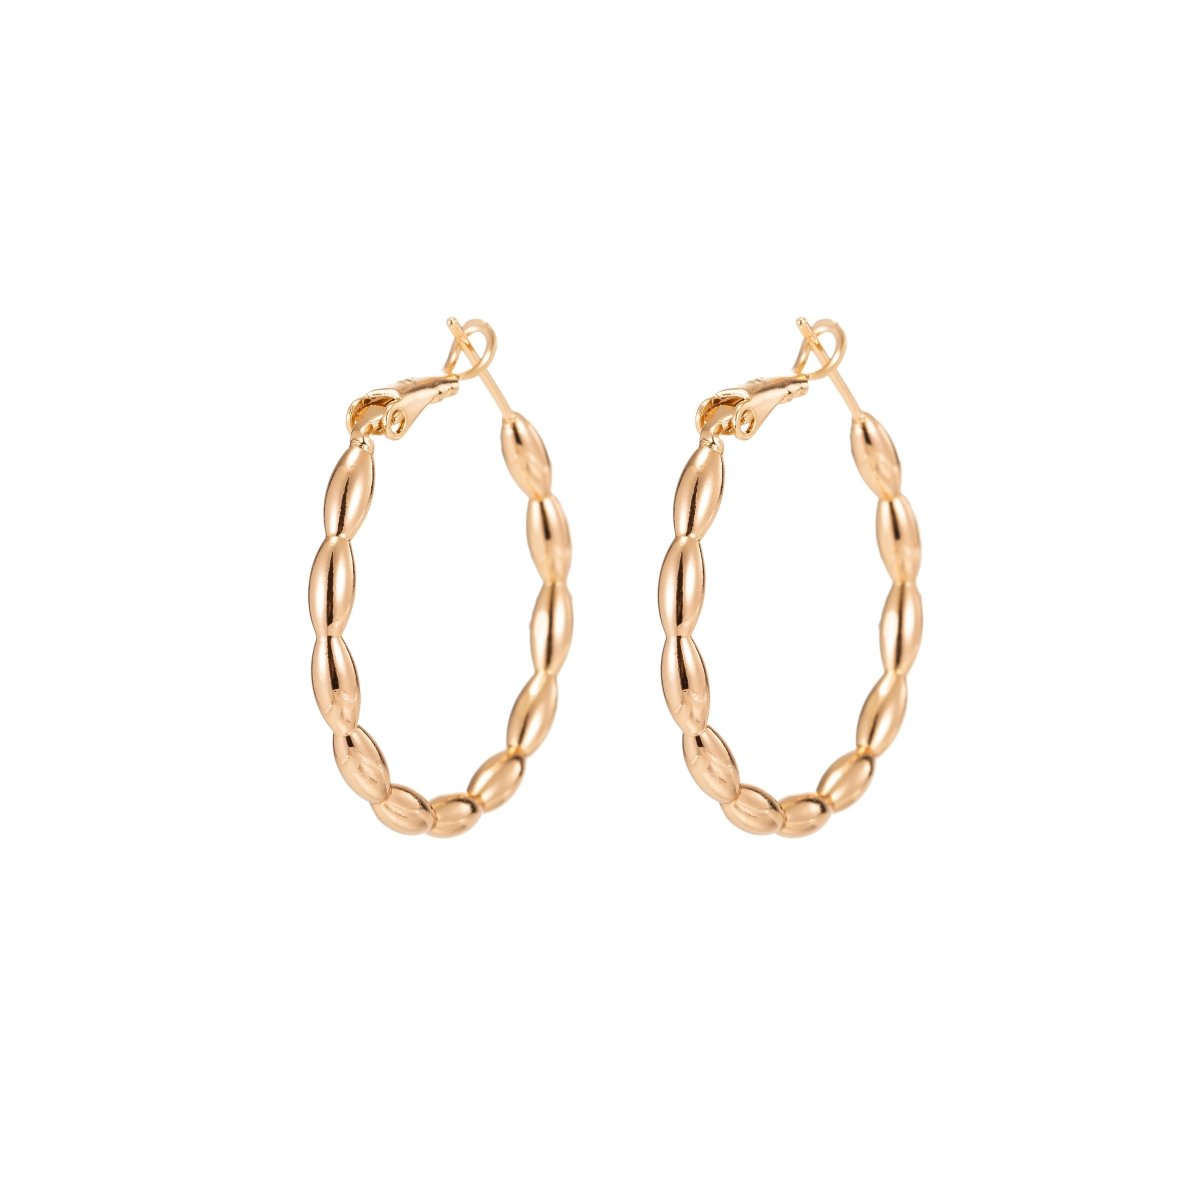 Mini Oval Braids Huggies Earrings, Tiny Plain Gold Filled Geometric Formal/Casual Daily Wear Earring Jewelry P-034 - DLUXCA